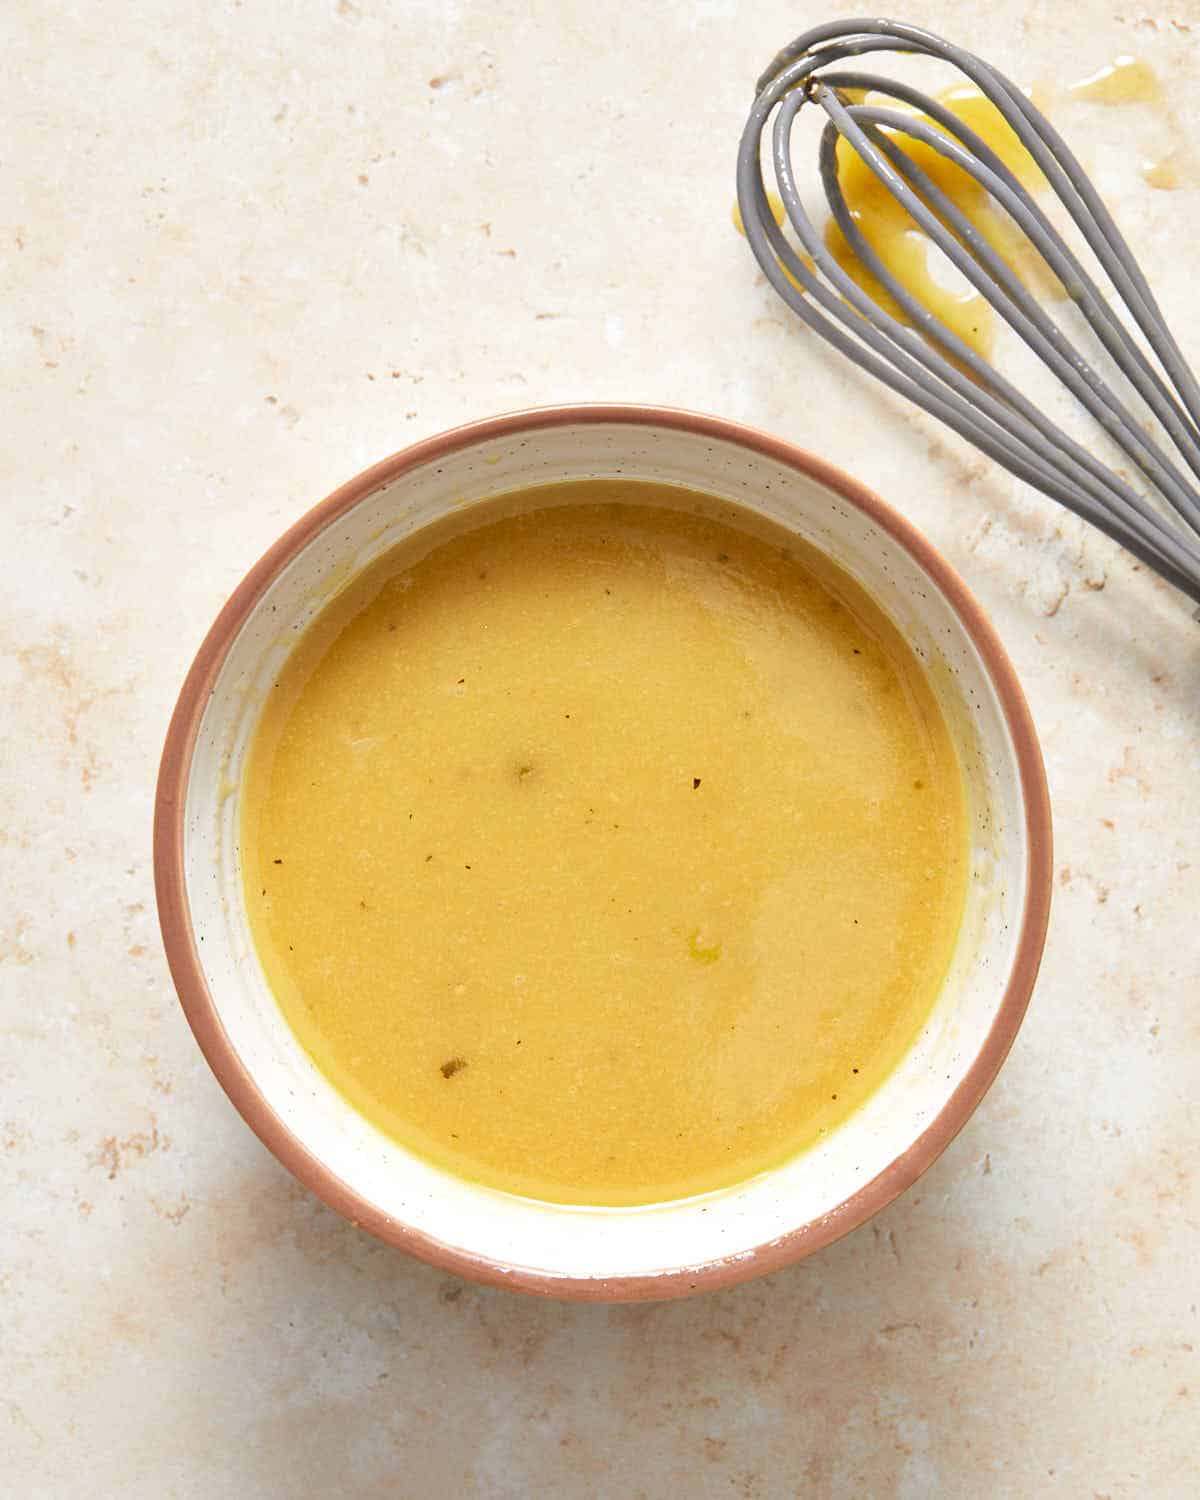 Dijon mustard dressing in a small bowl.